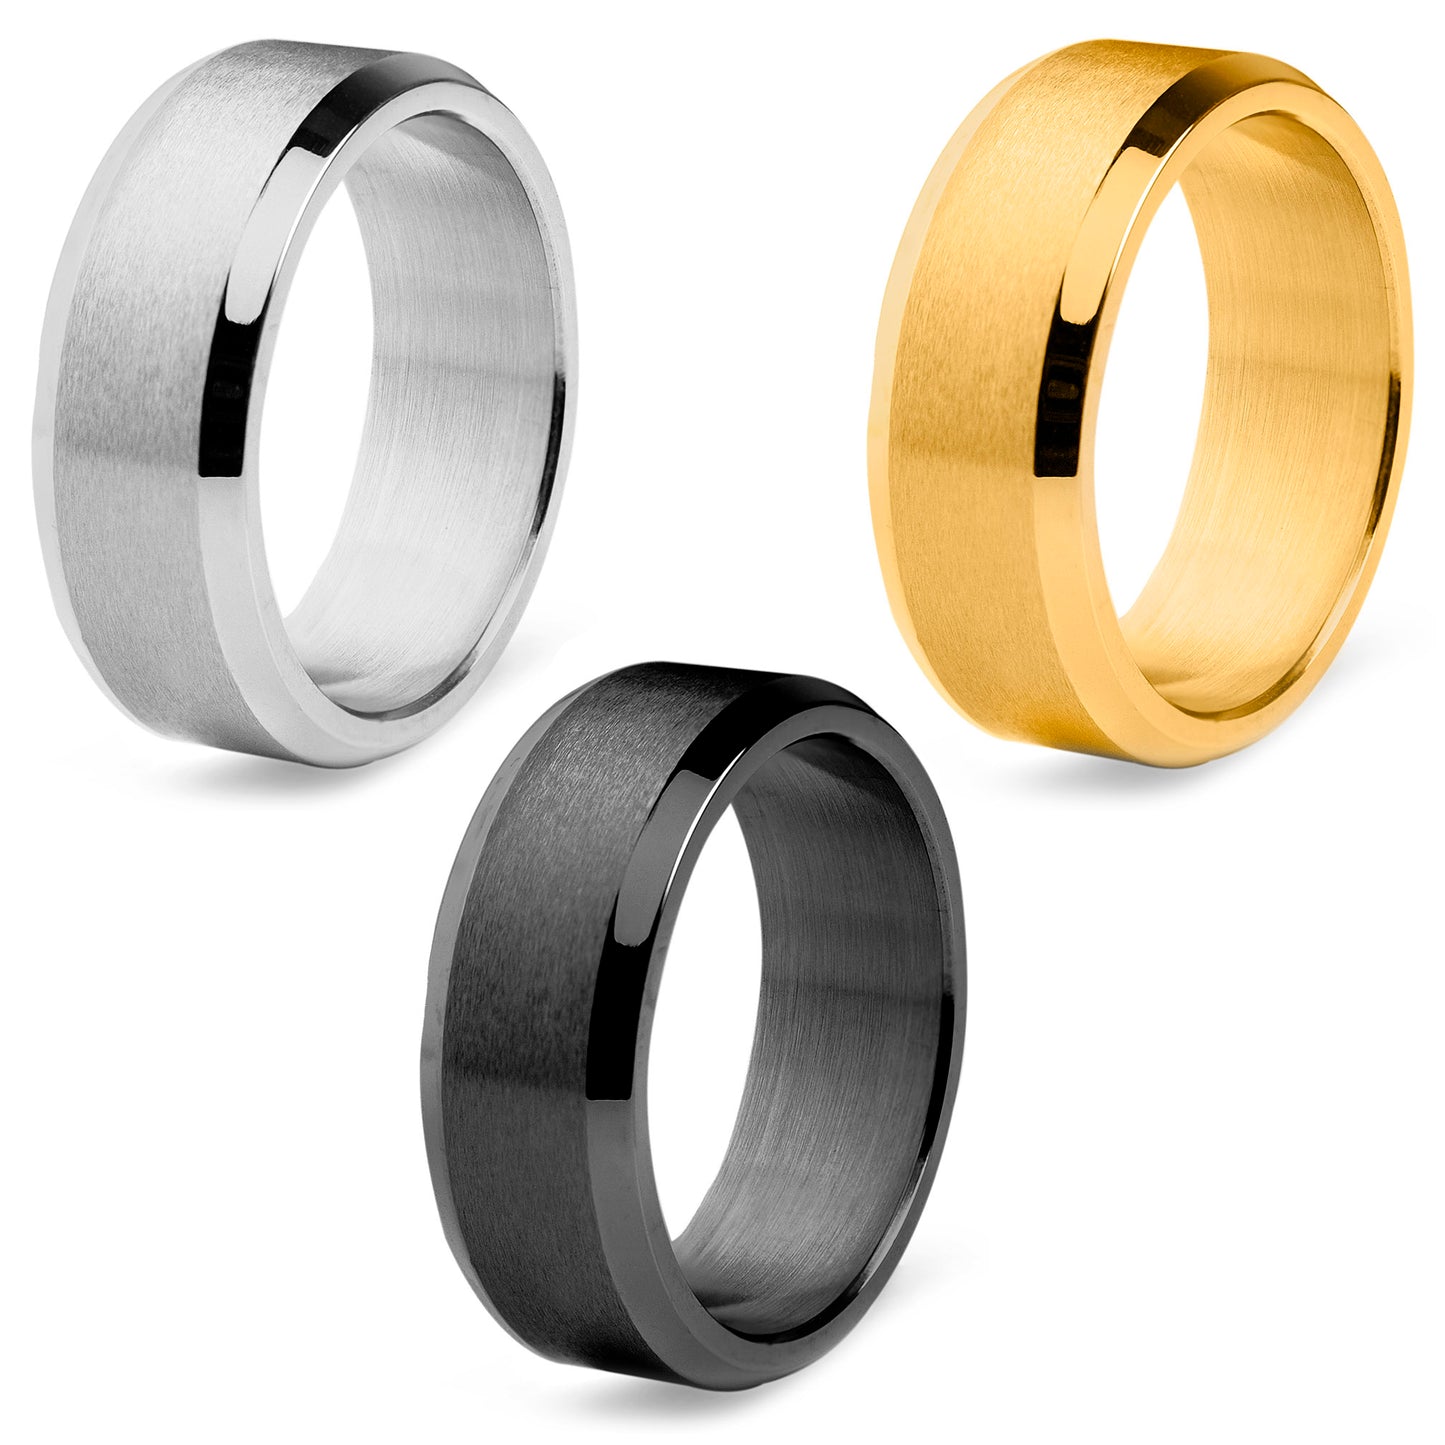 Men's 100 Piece Box Ring Set Brushed Beveled Edge Steel Wedding Band Rings (8mm)